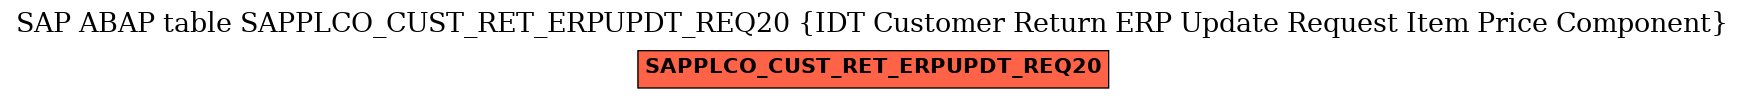 E-R Diagram for table SAPPLCO_CUST_RET_ERPUPDT_REQ20 (IDT Customer Return ERP Update Request Item Price Component)